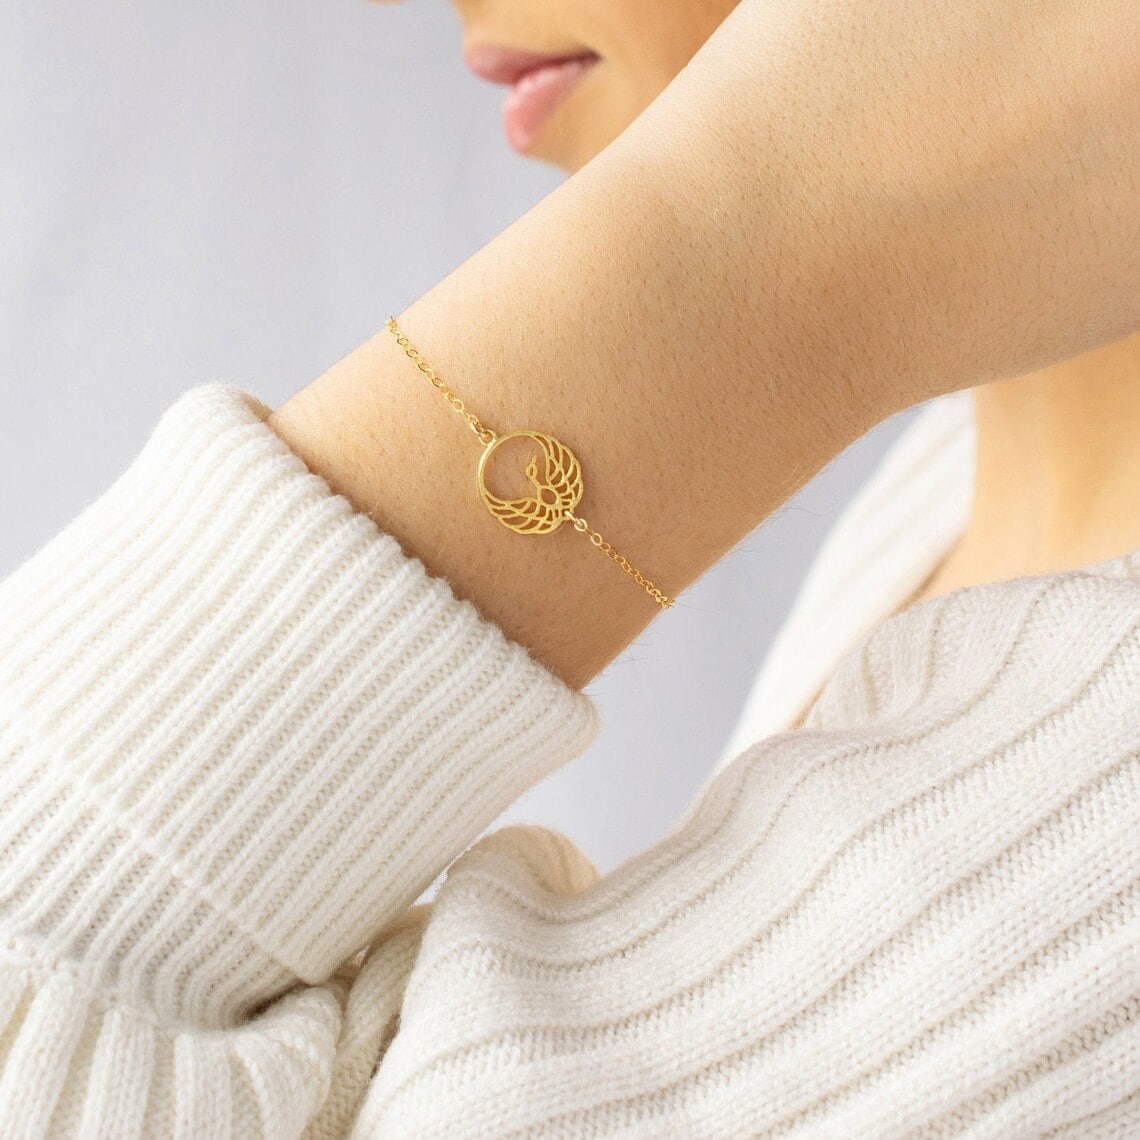 gold phoenix bracelet on the woman's wrist